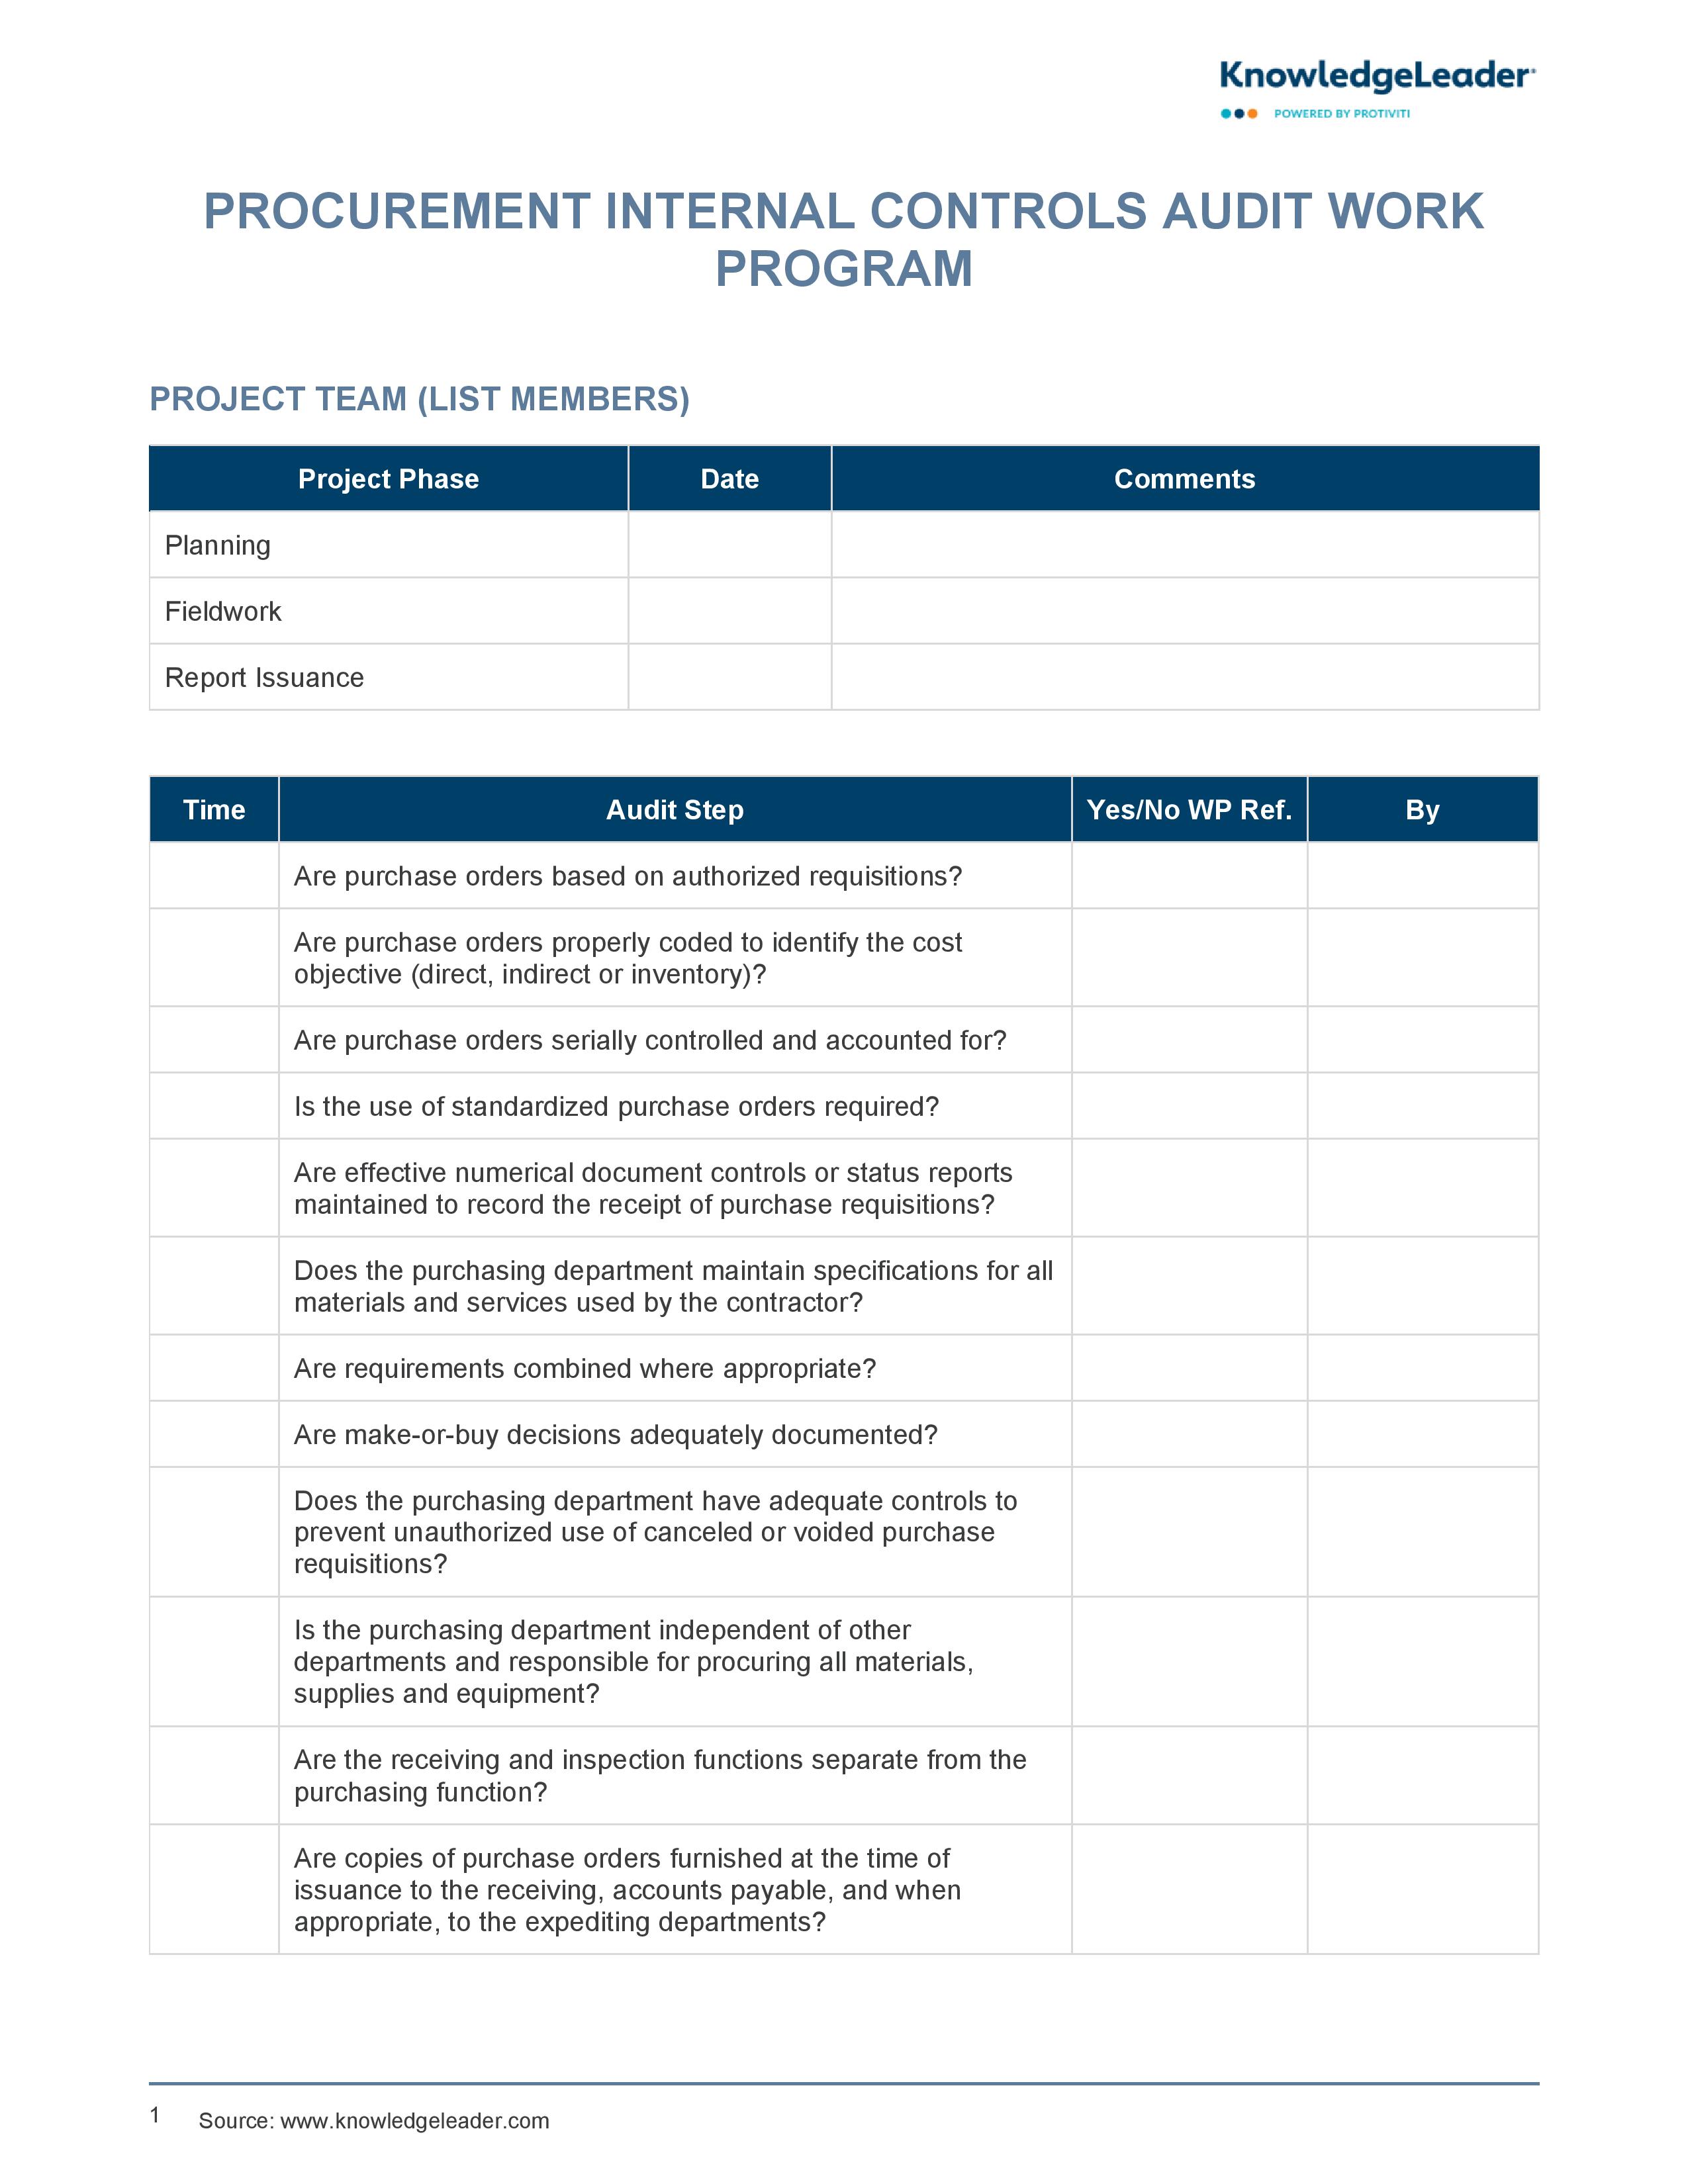 Screenshot of the first page of Procurement Internal Controls Audit Work Program